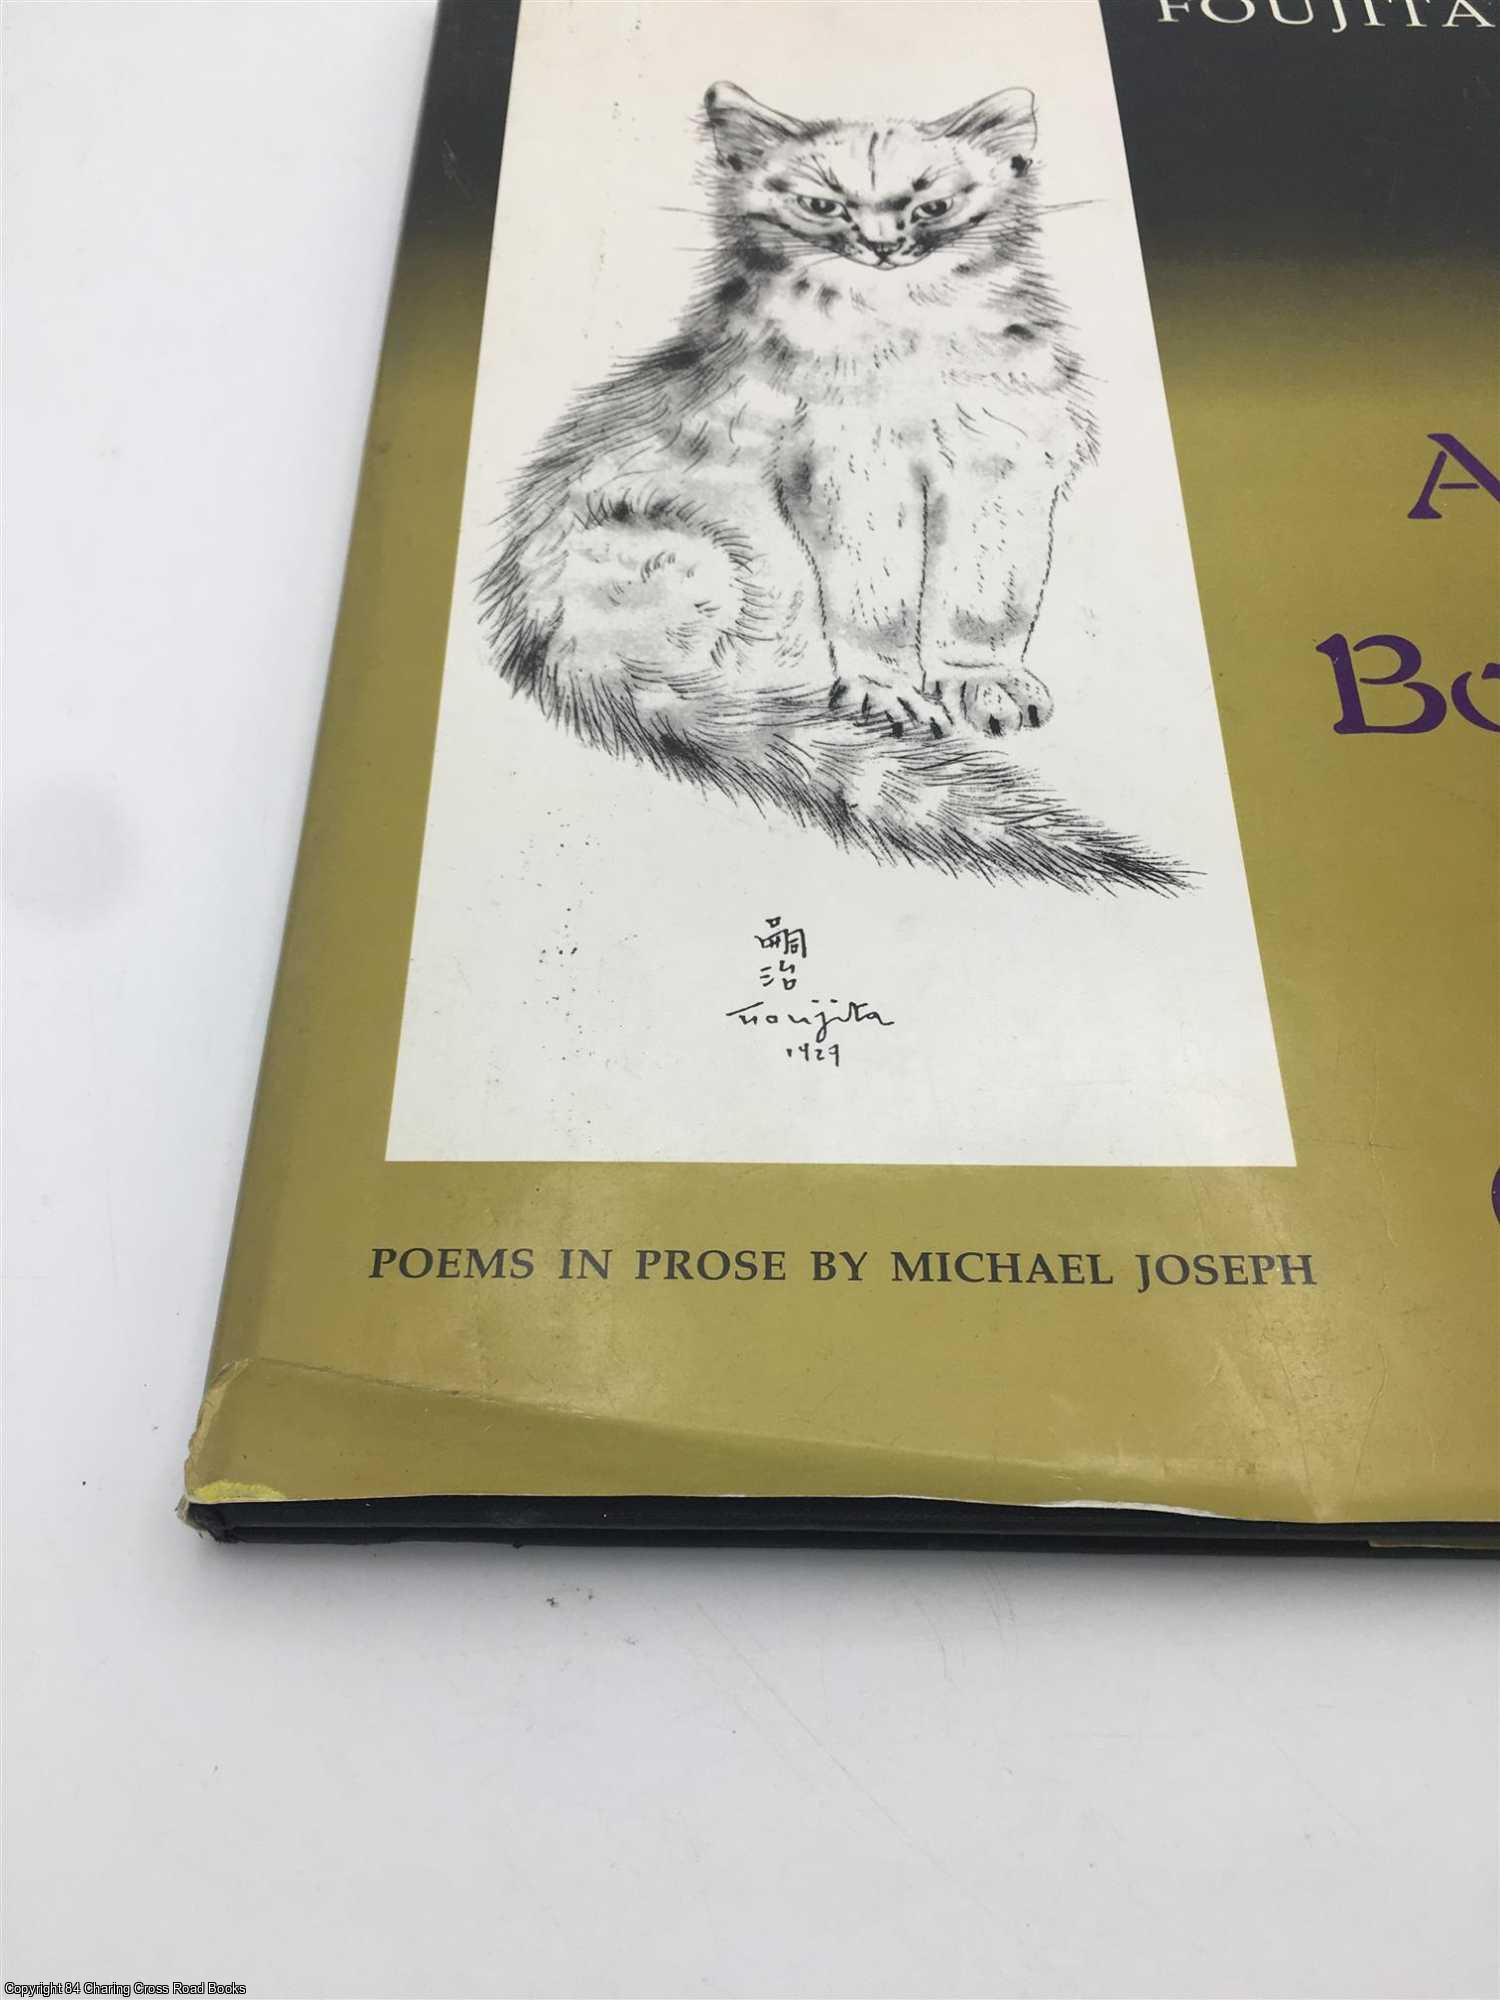 A Book of Cats by Tsugouharu Foujita on 84 Charing Cross Rare Books